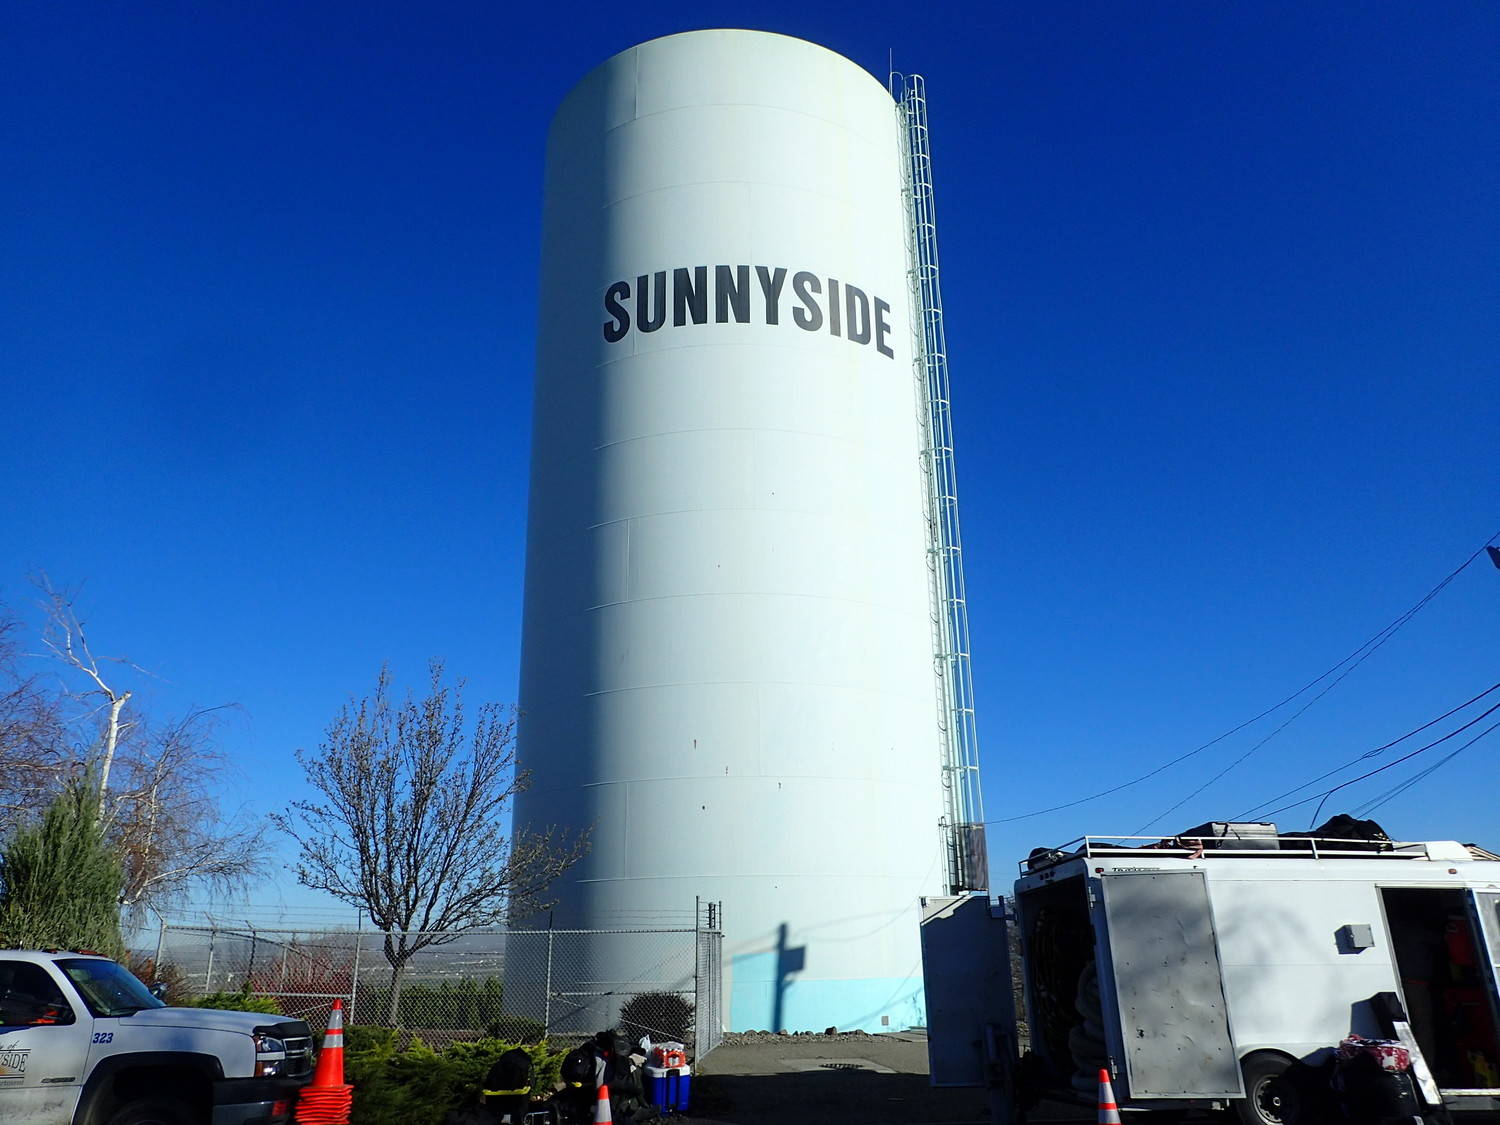 Sunnyside – Skyline and Grandview Reservoirs